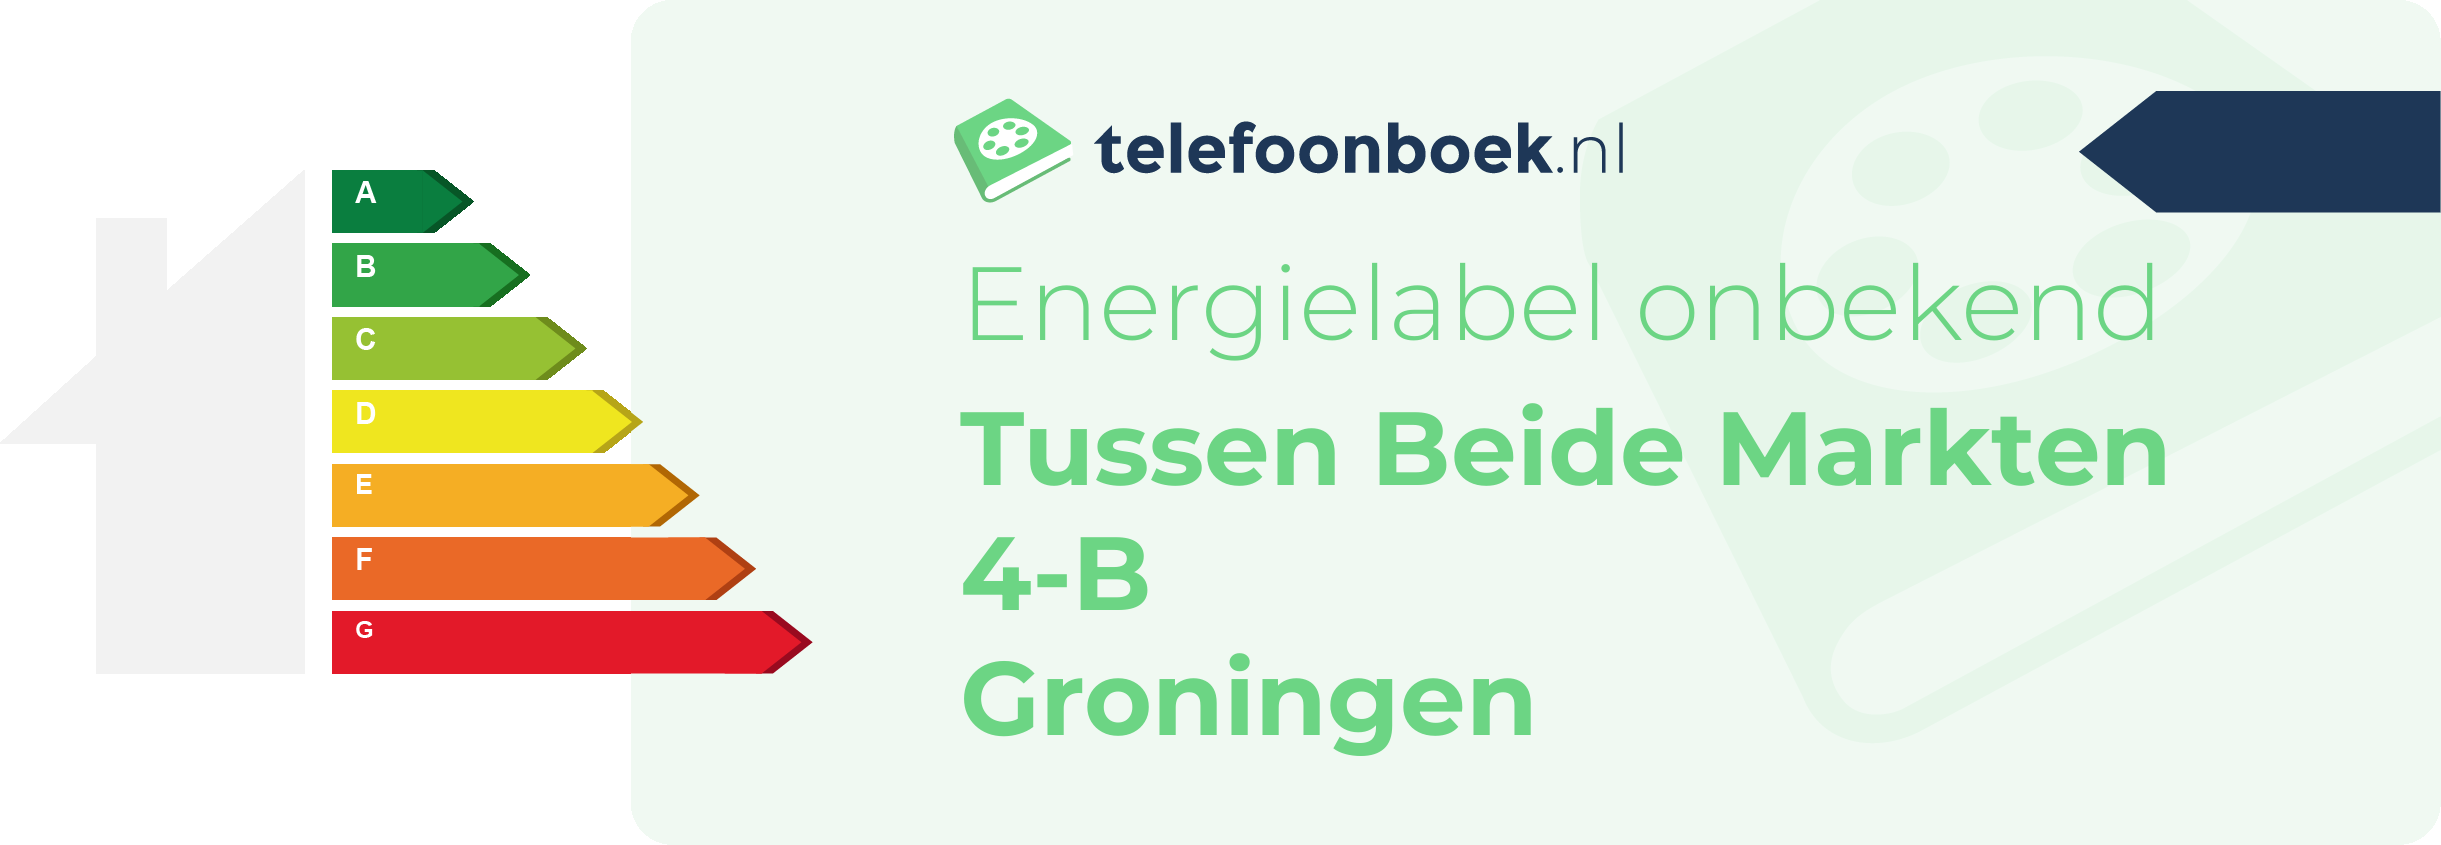 Energielabel Tussen Beide Markten 4-B Groningen